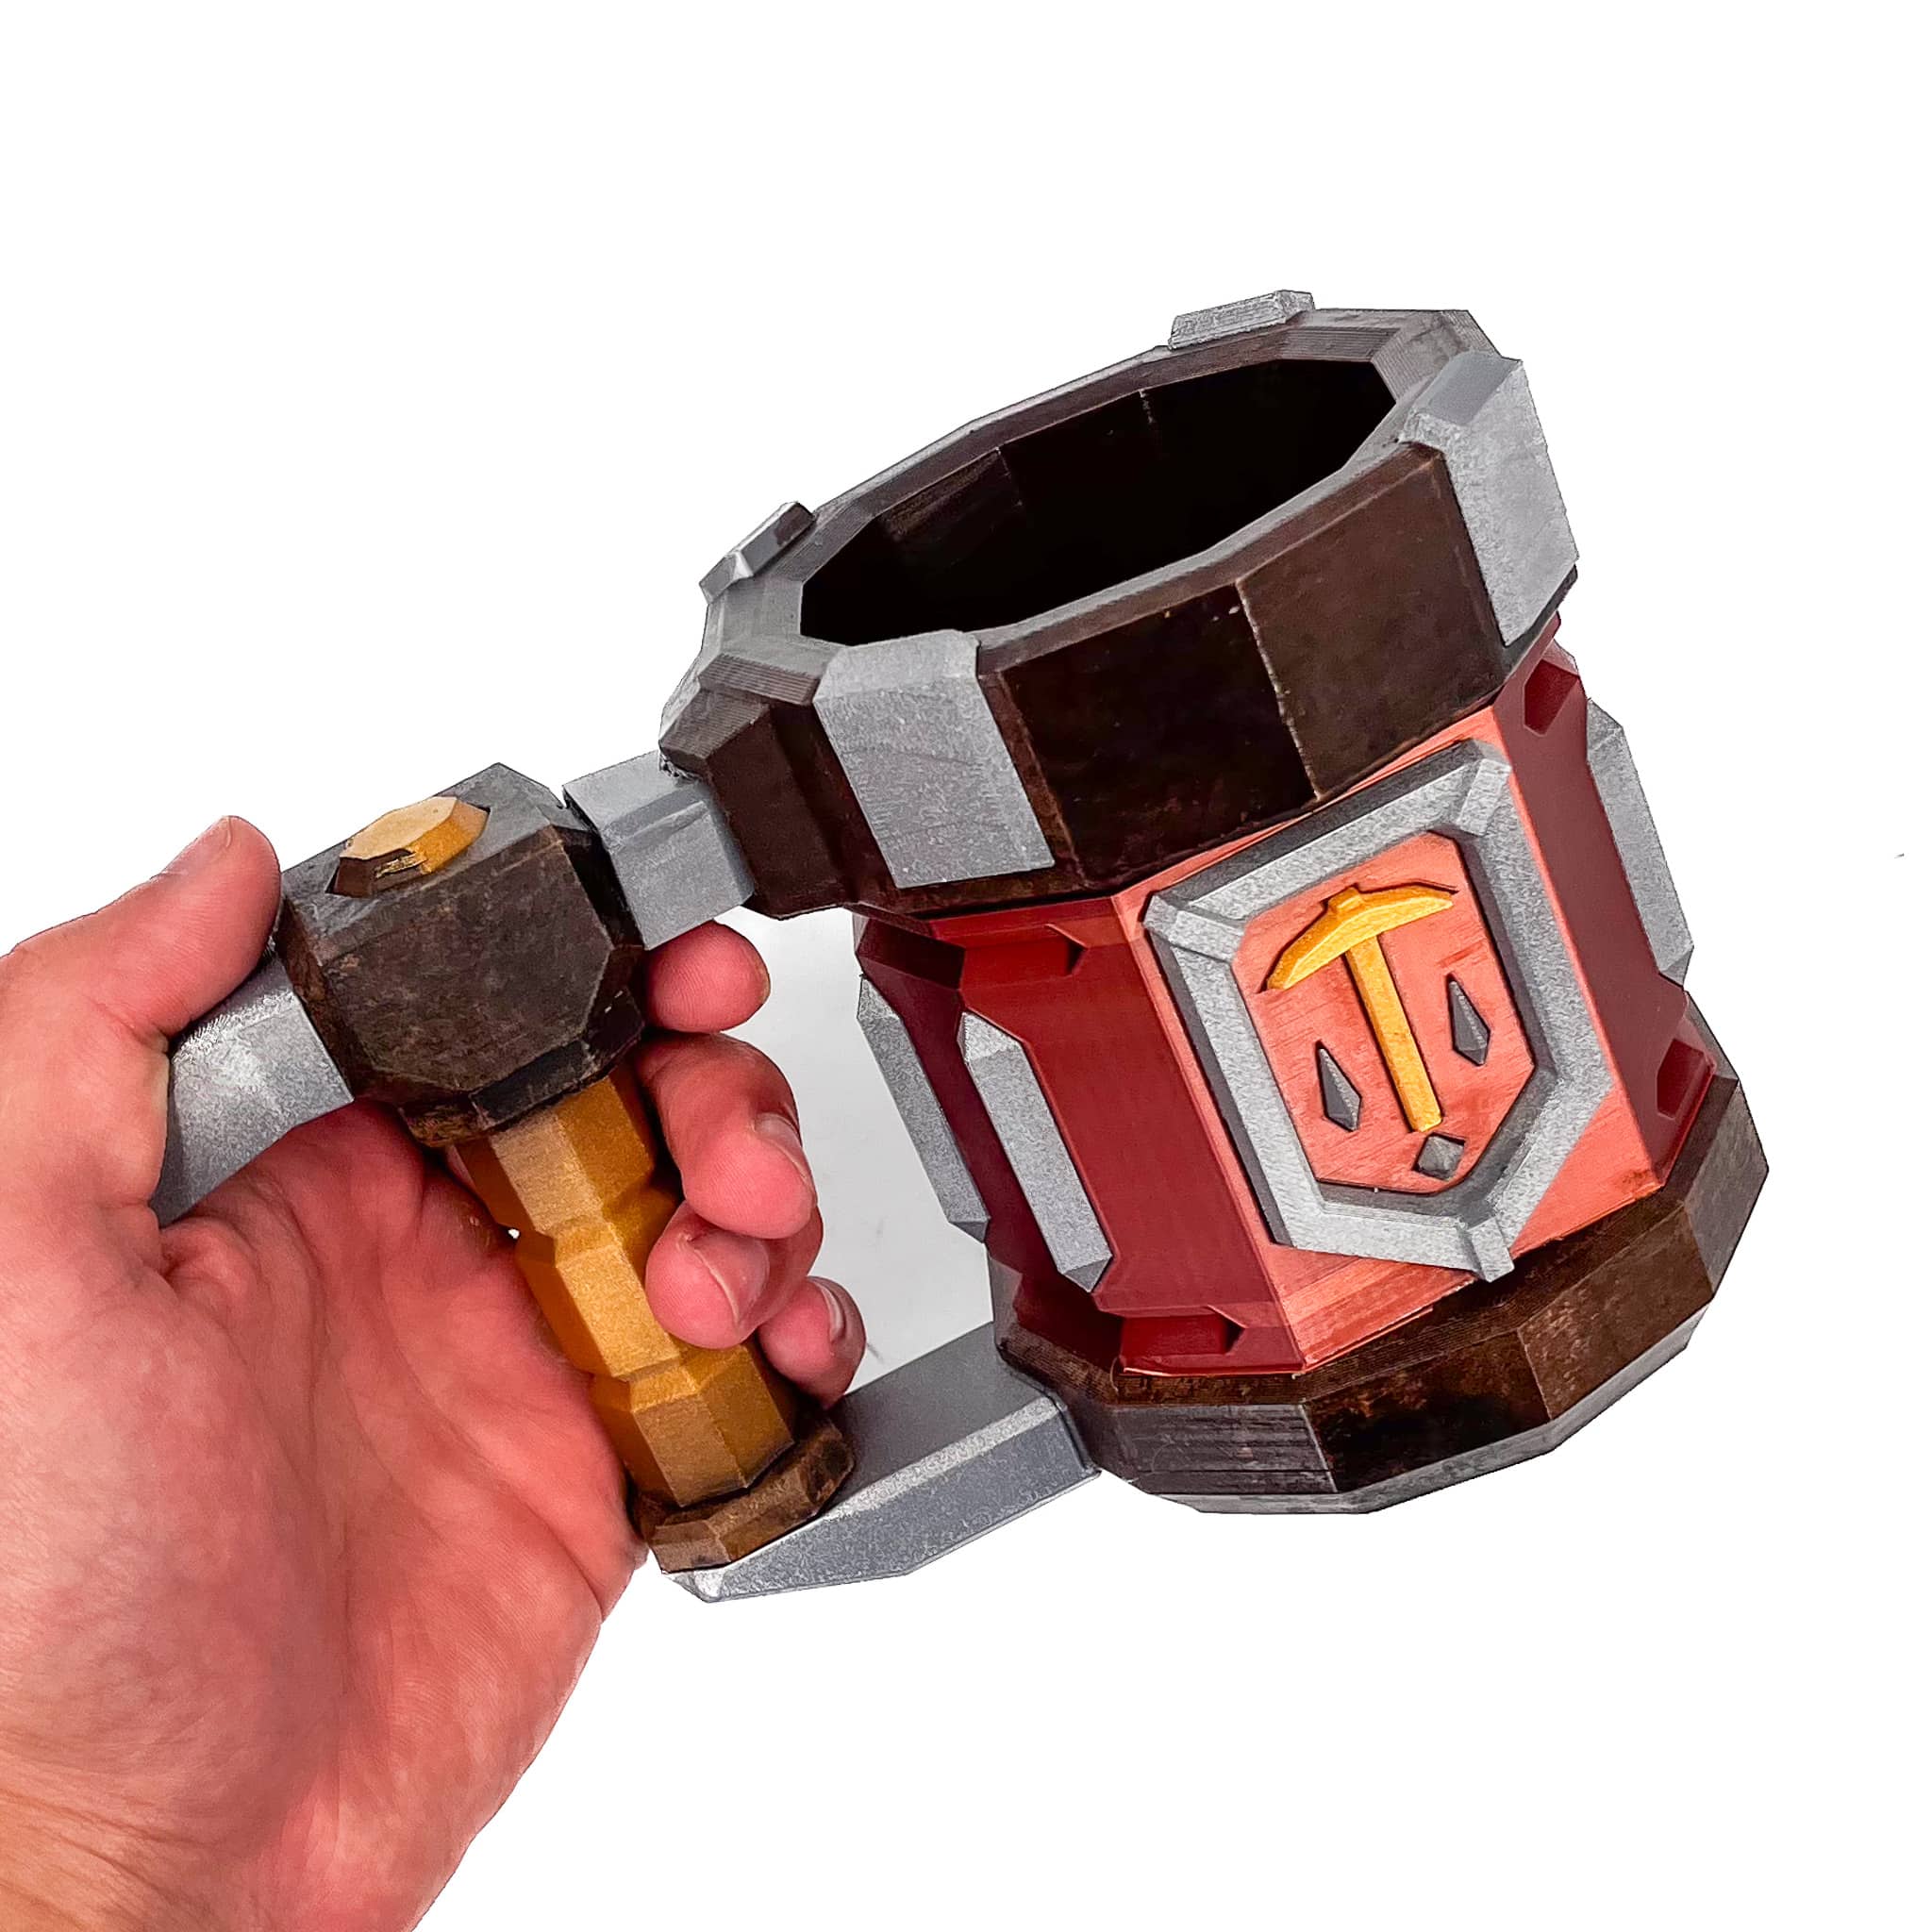 Dark Morkite Mug replica prop Deep Rock Galactic